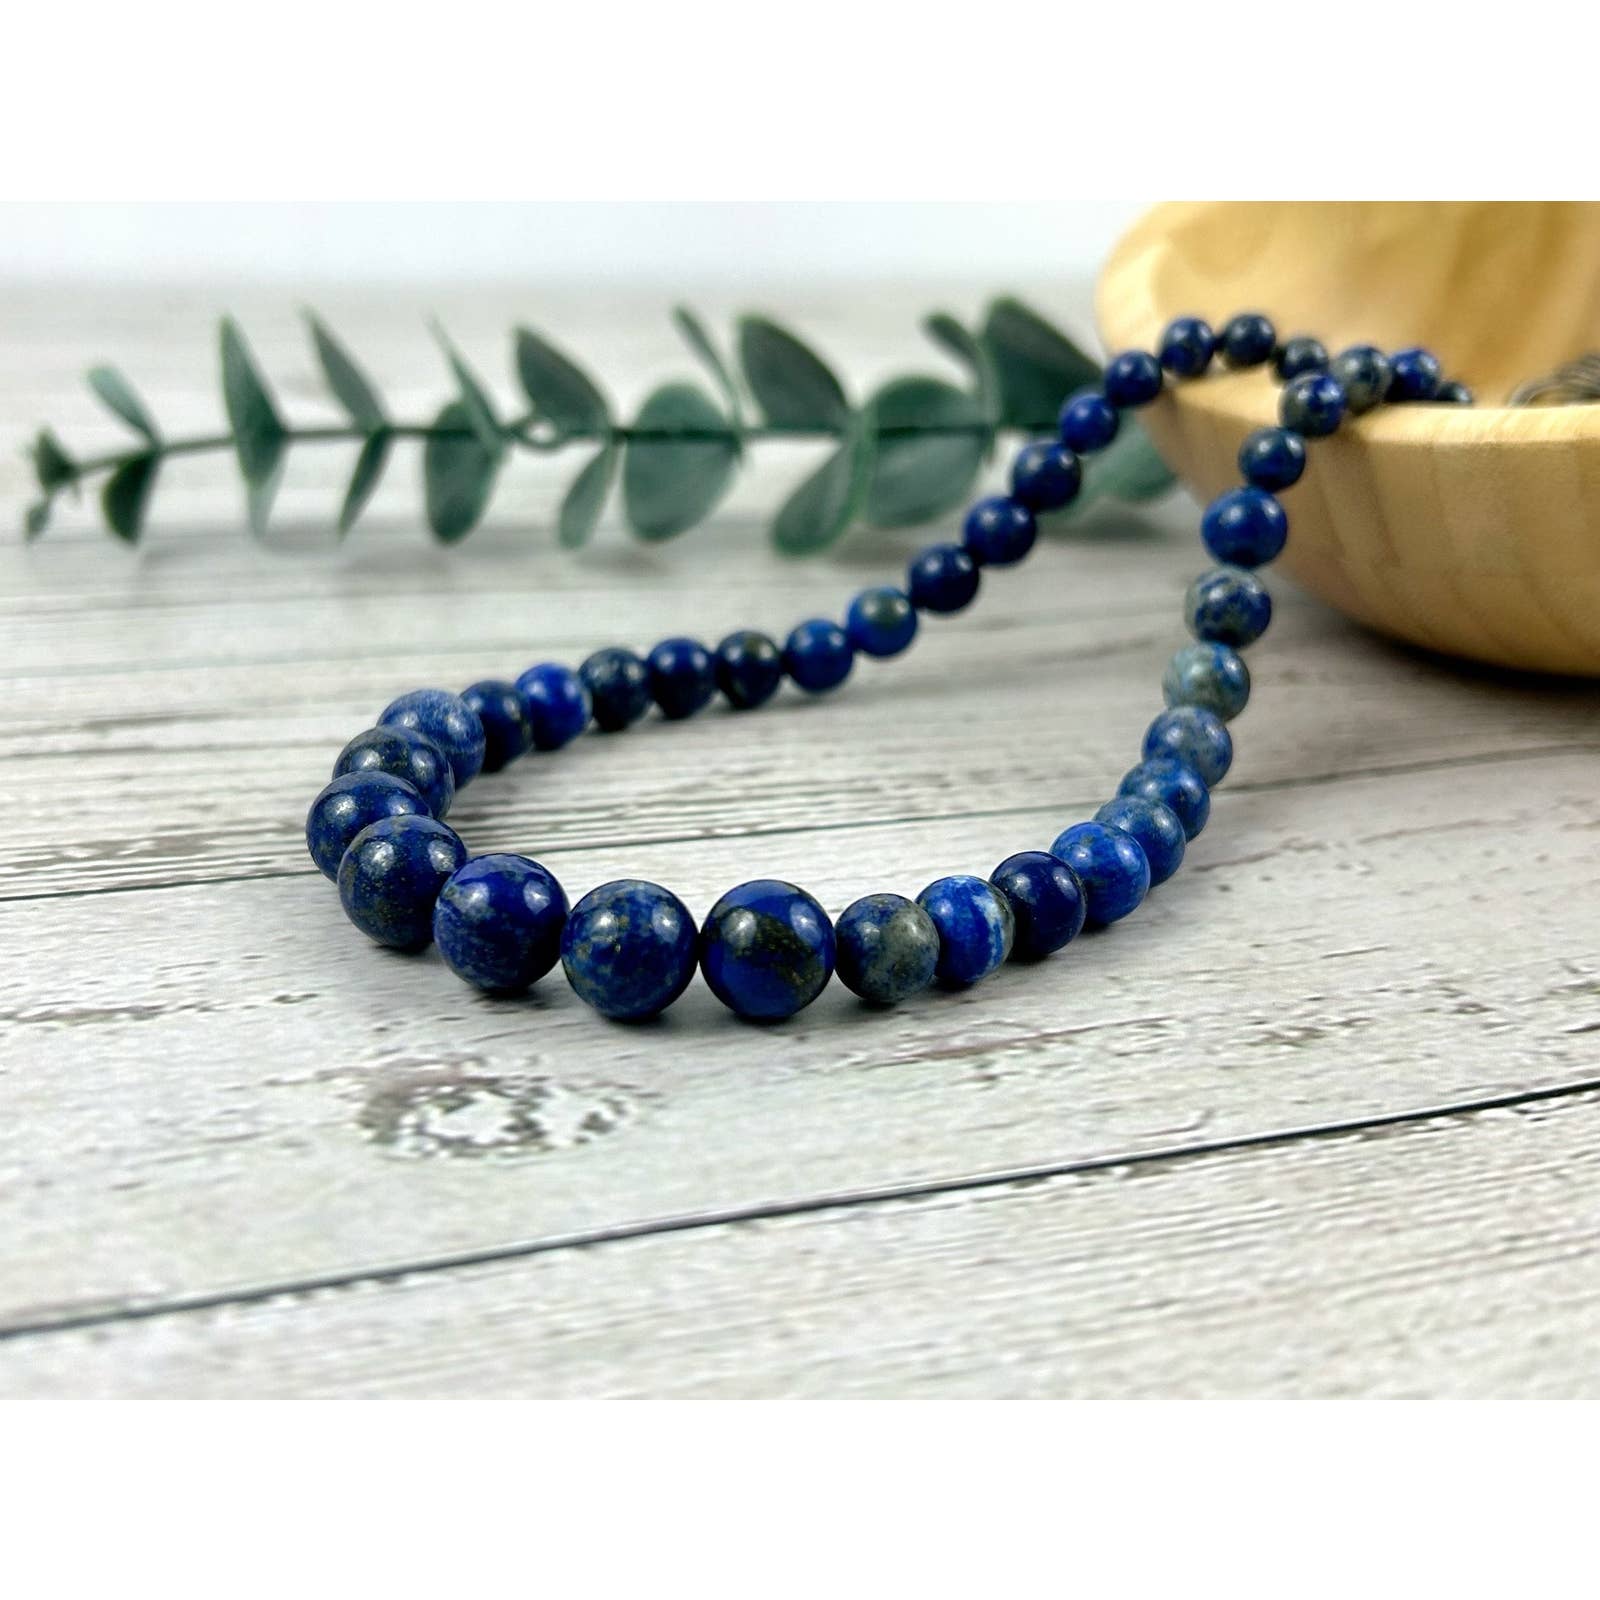 Lapis Lazuli Necklace - Beaded Necklace